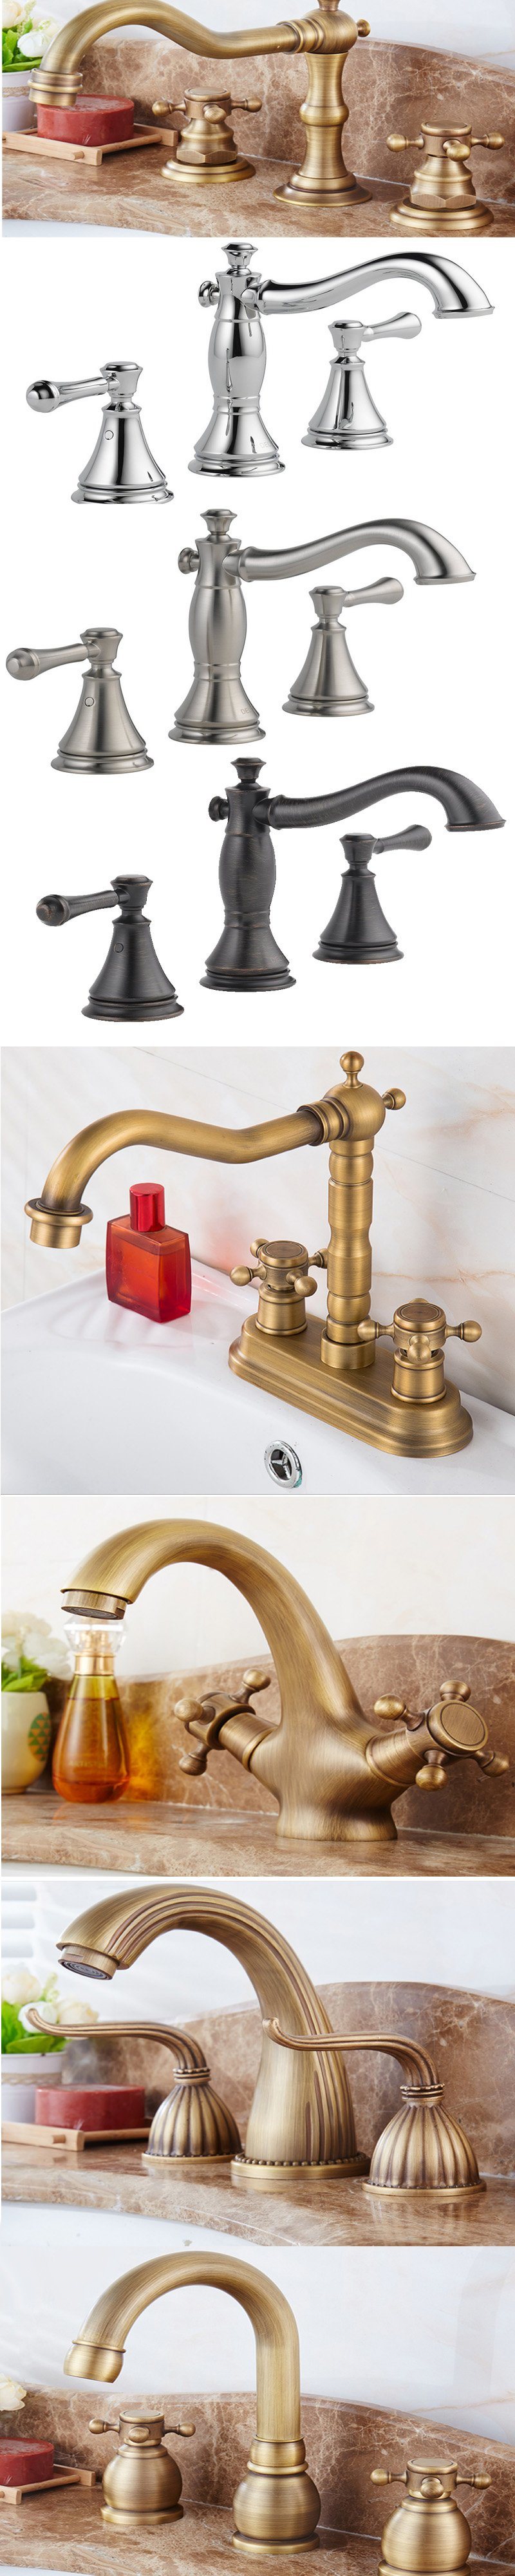 Europe Style Luxury Golden Brass Basin Faucet Crystal Handles Vanity Sink Mixer Tap